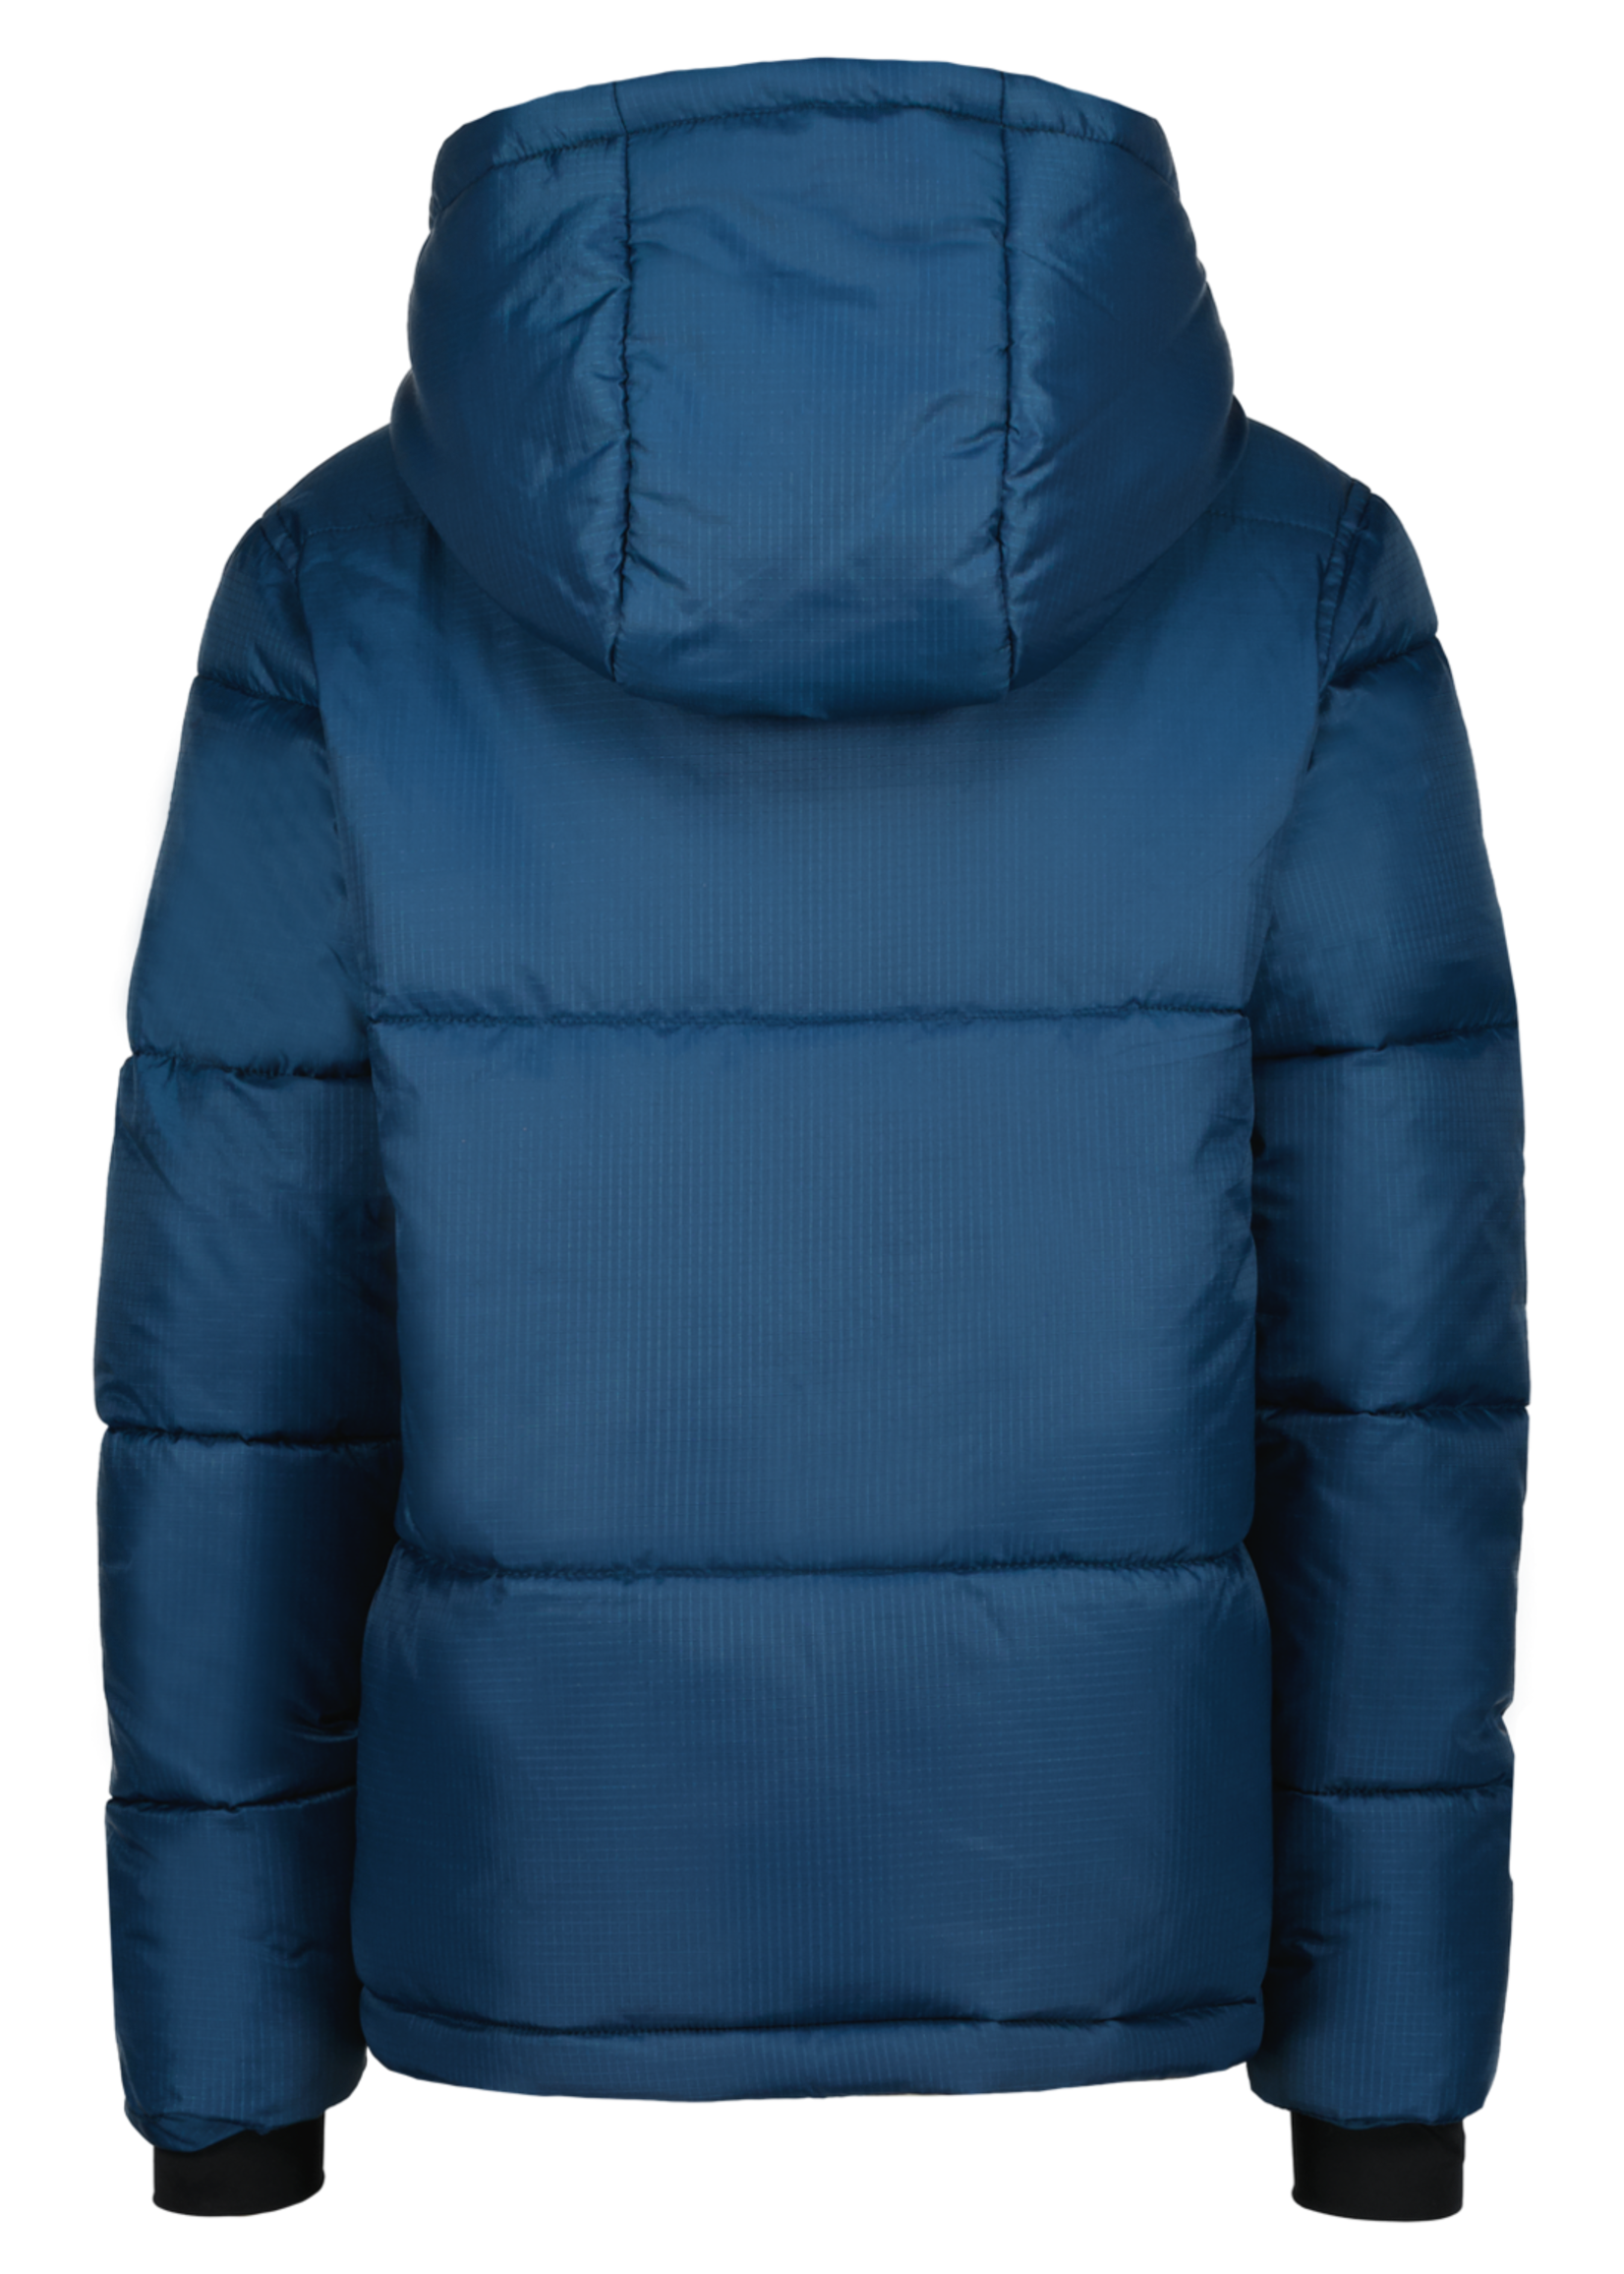 Tuvalu jacket - Dive blue